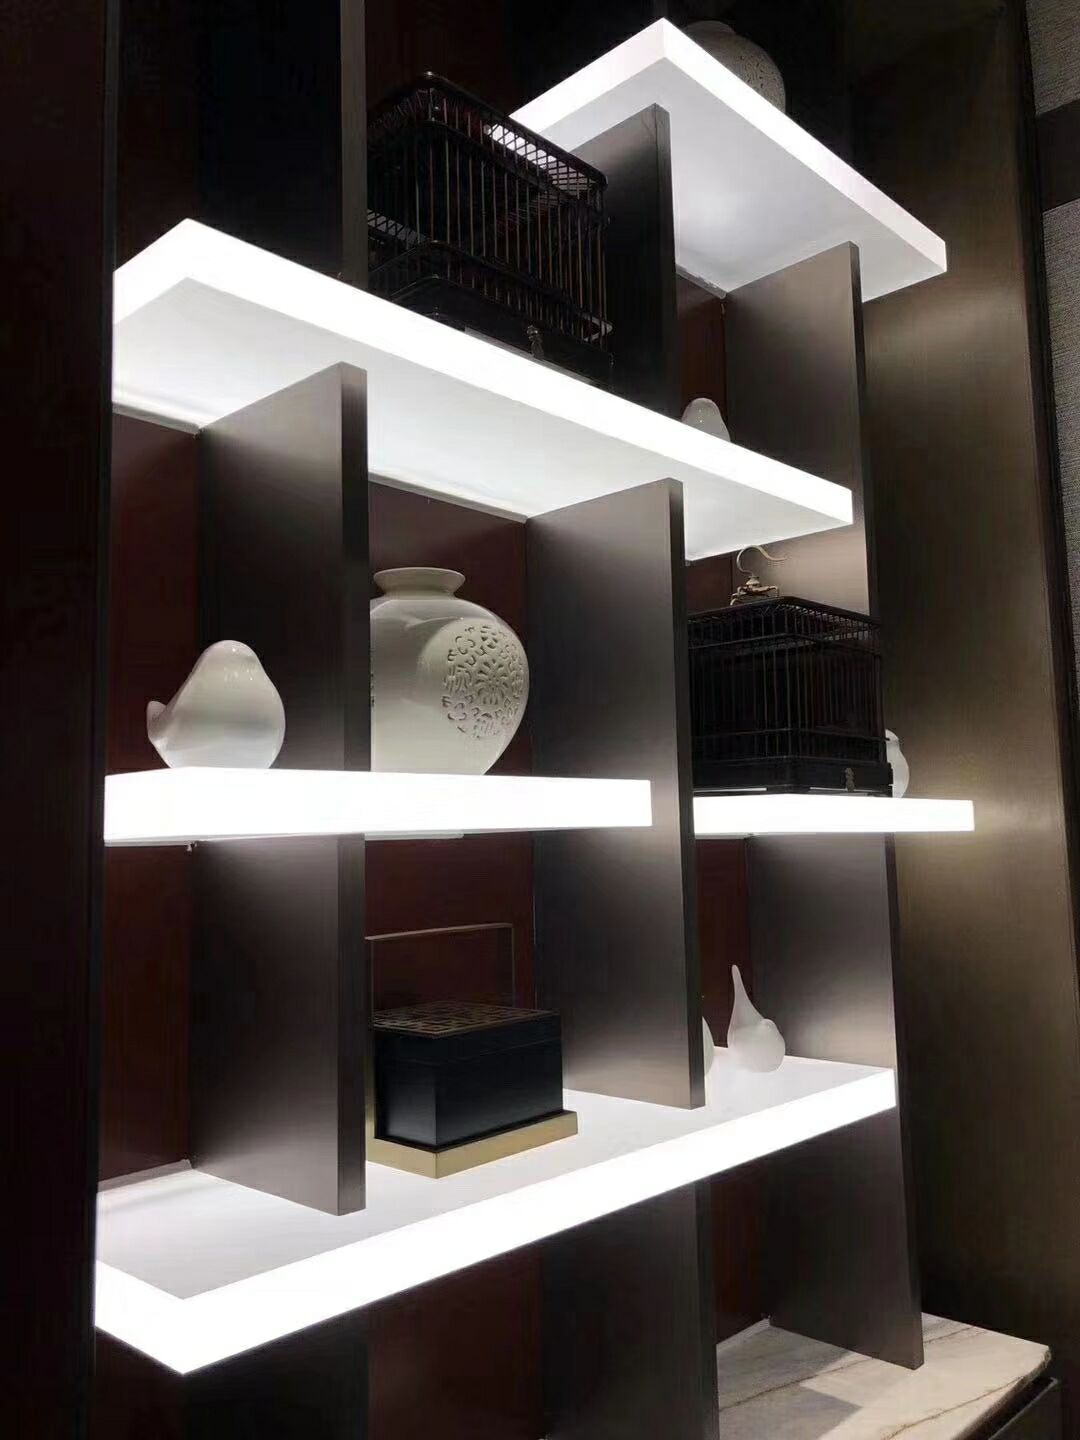 Edge-lit acrylic shelf